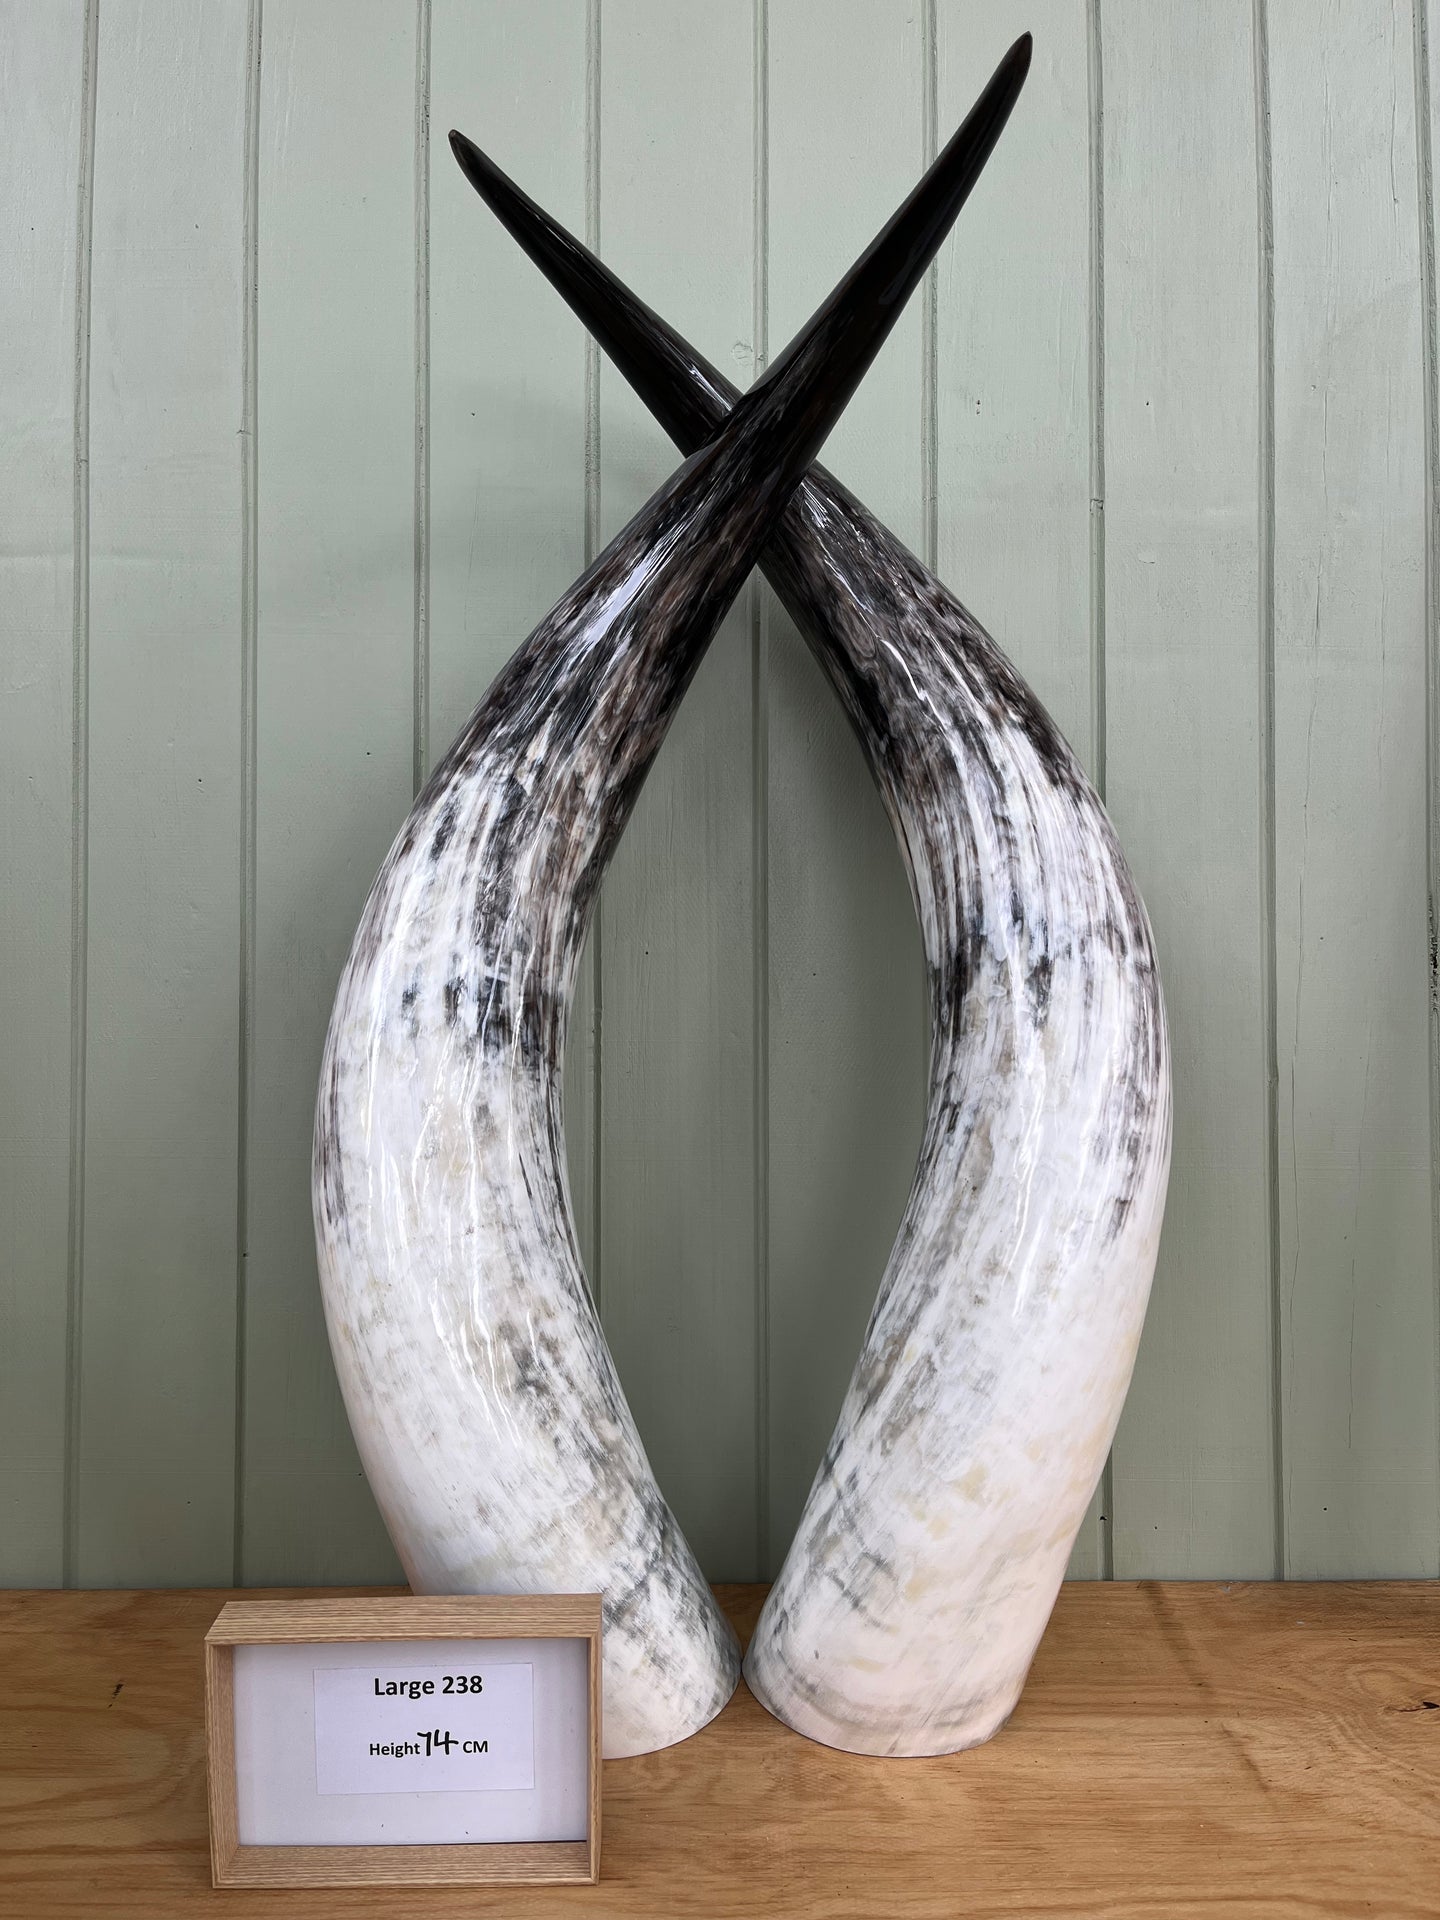 Ankole Cattle Horns - Large 238